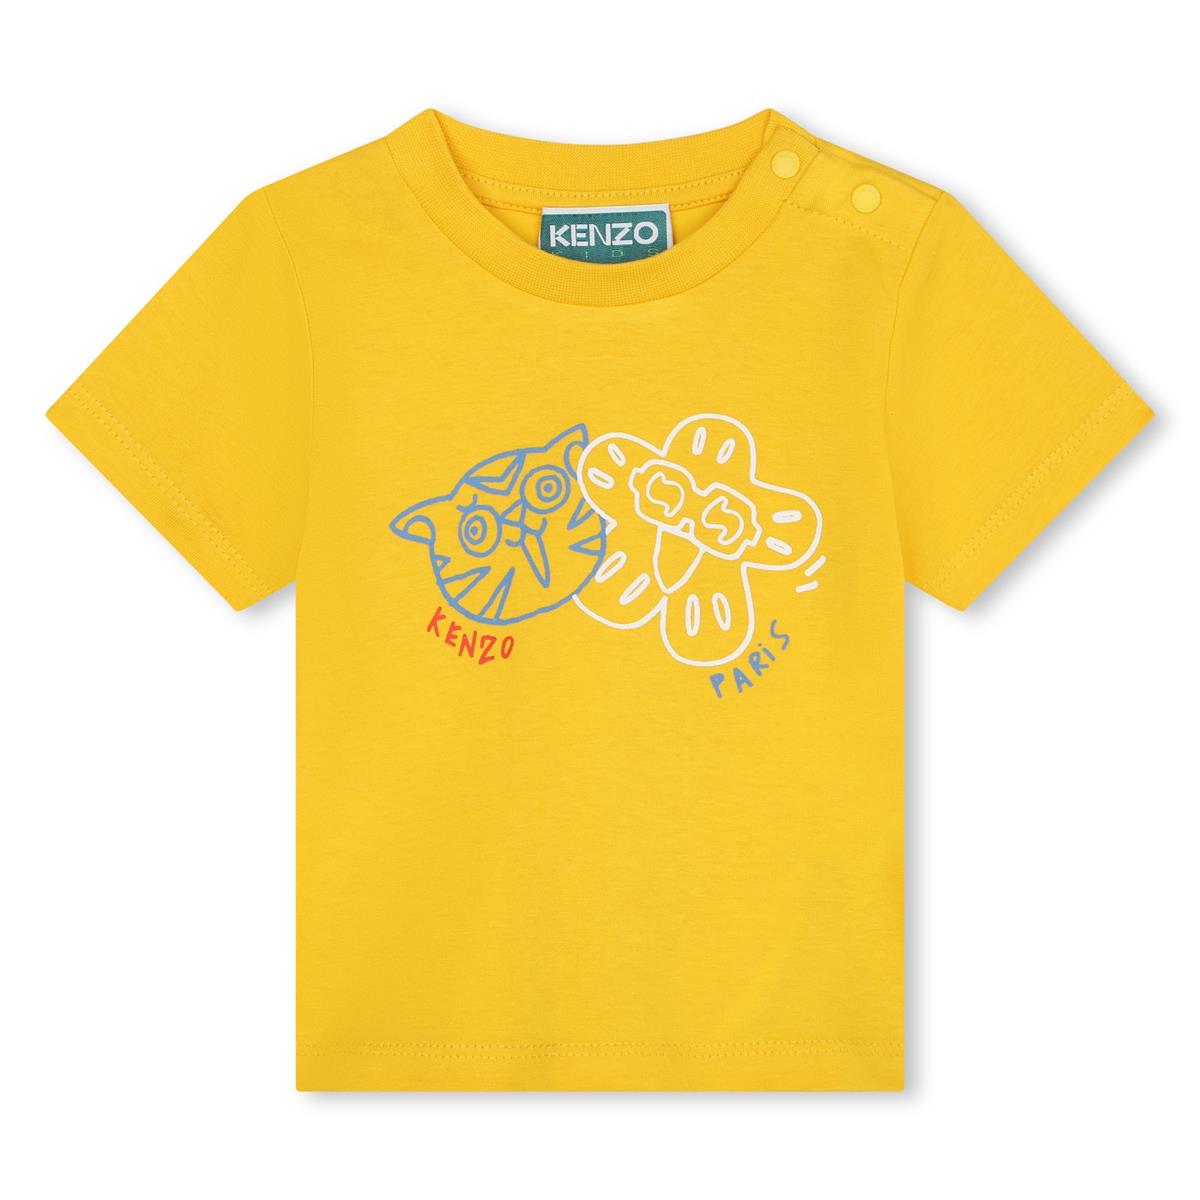 Baby Boys Yellow Cotton T-Shirt